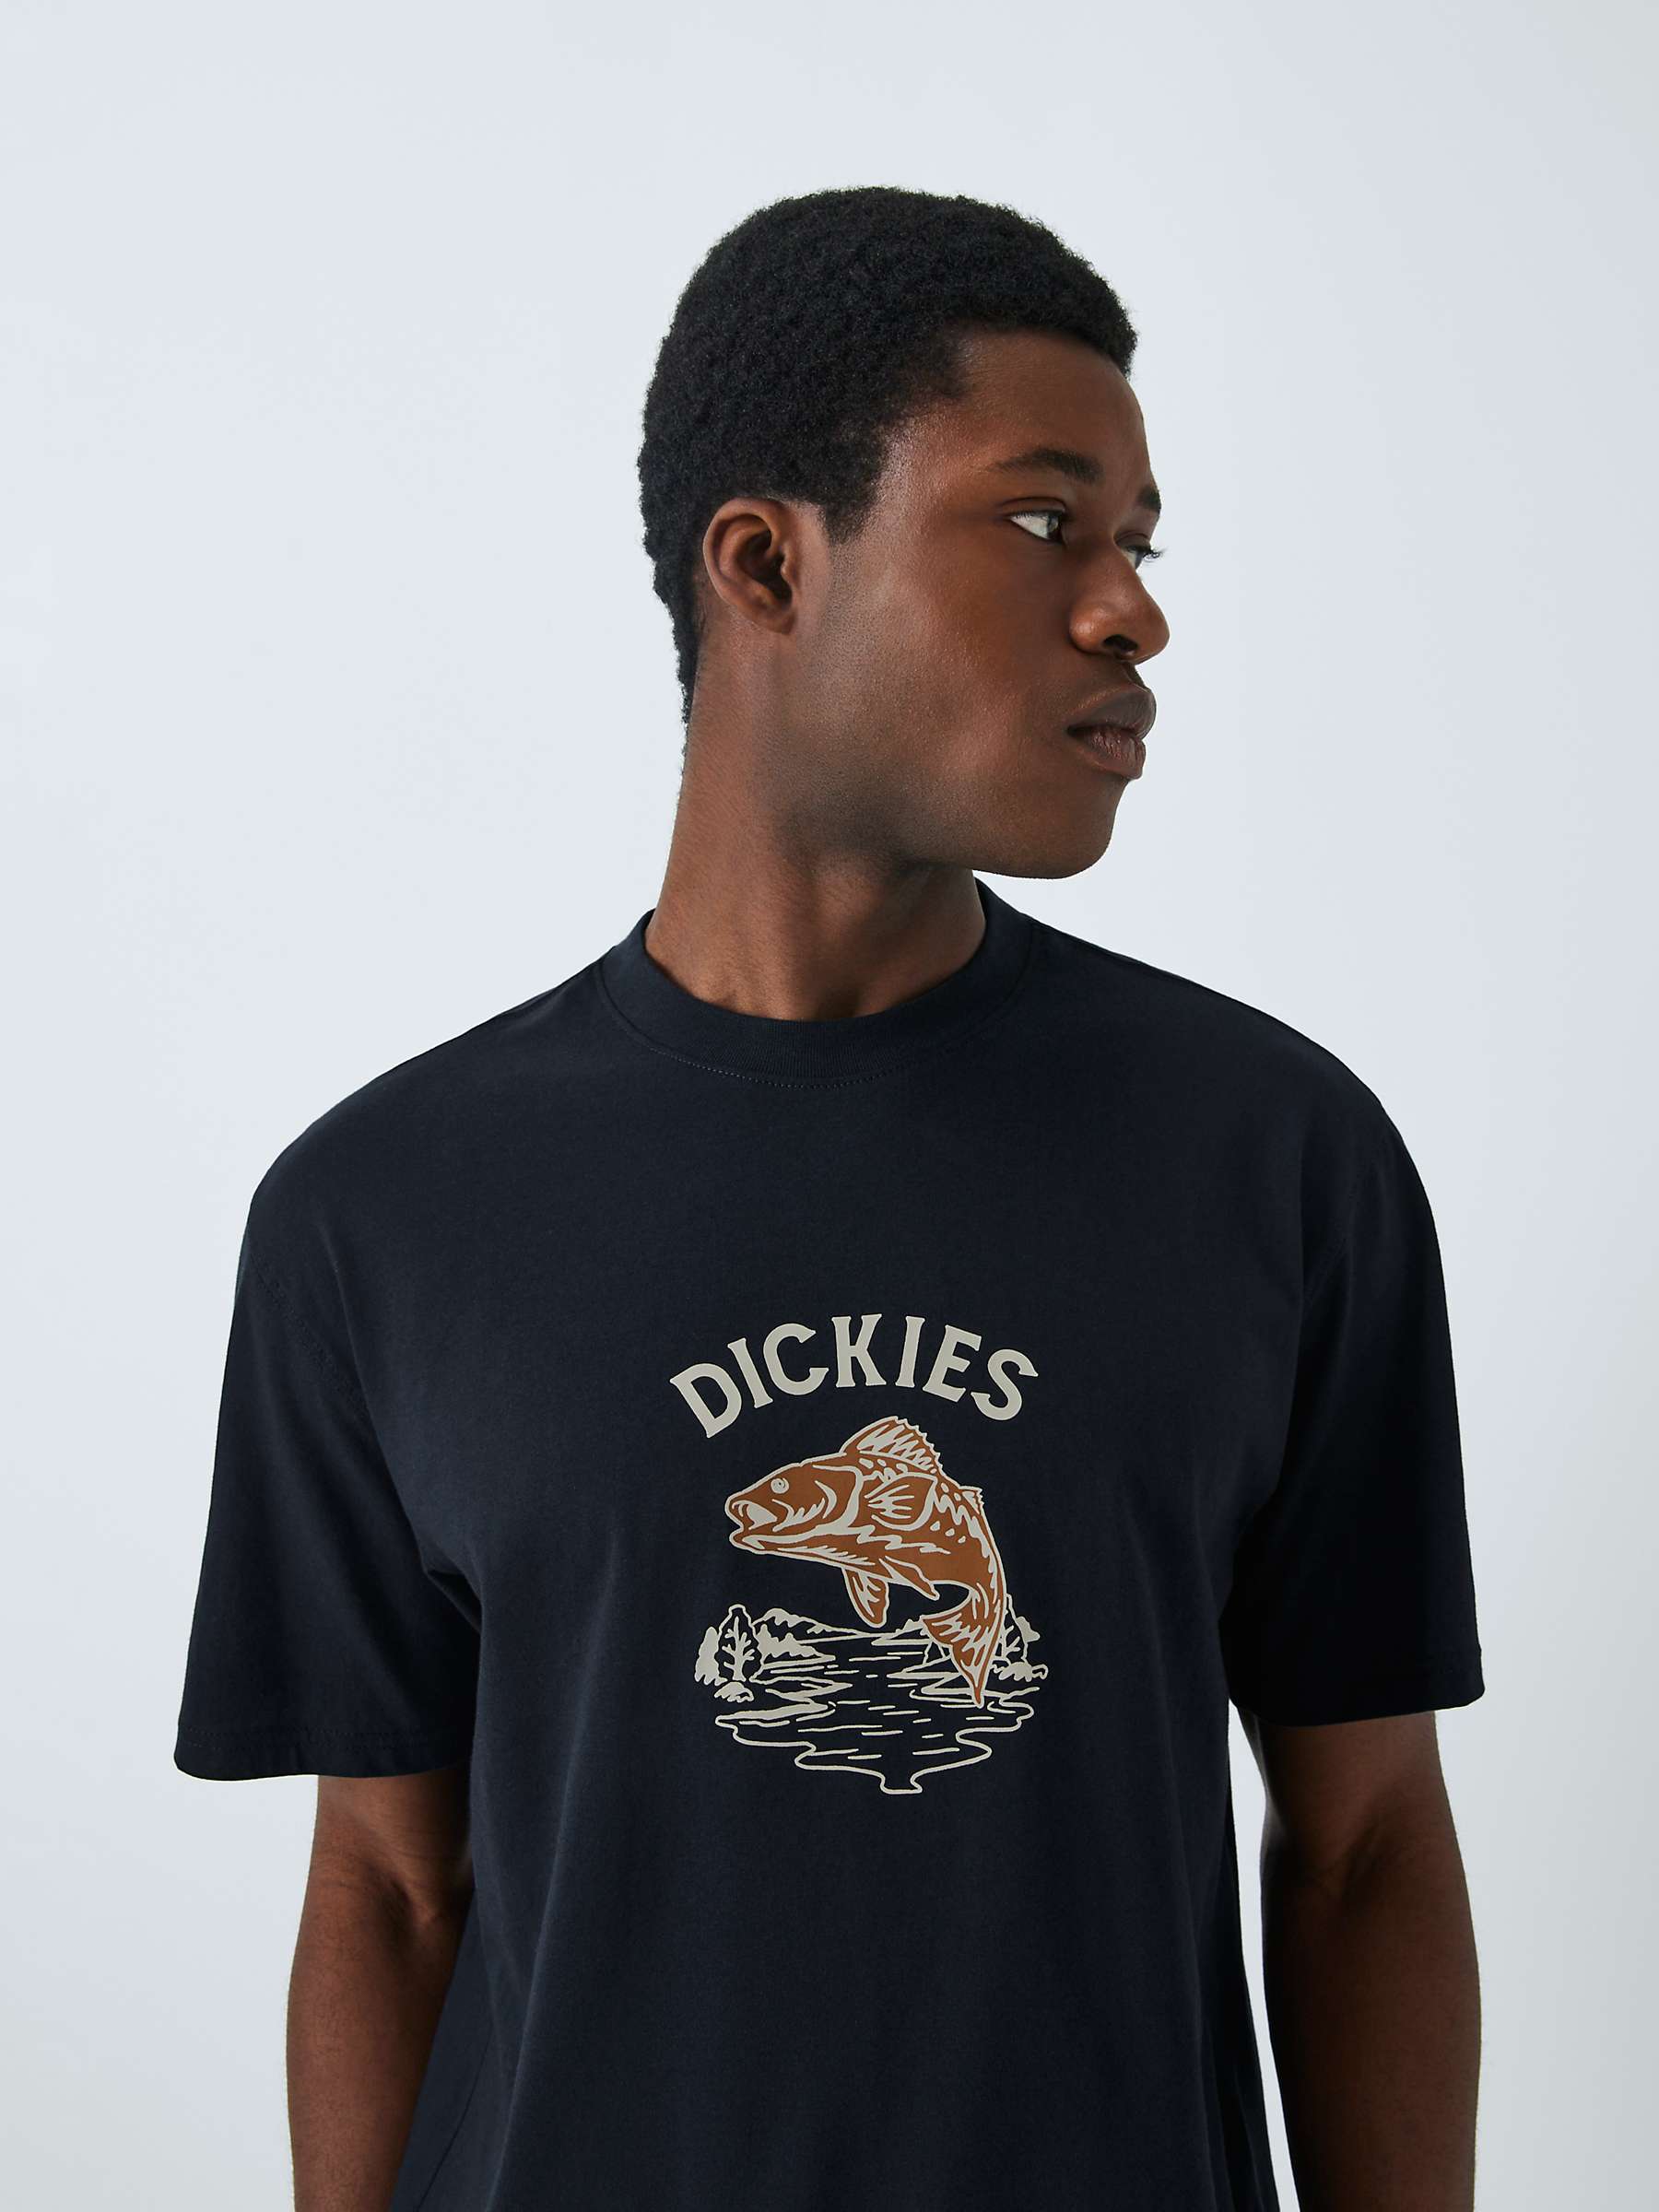 Buy Dickies Dumfries Short Sleeve T-Shirt, Dark Navy Online at johnlewis.com